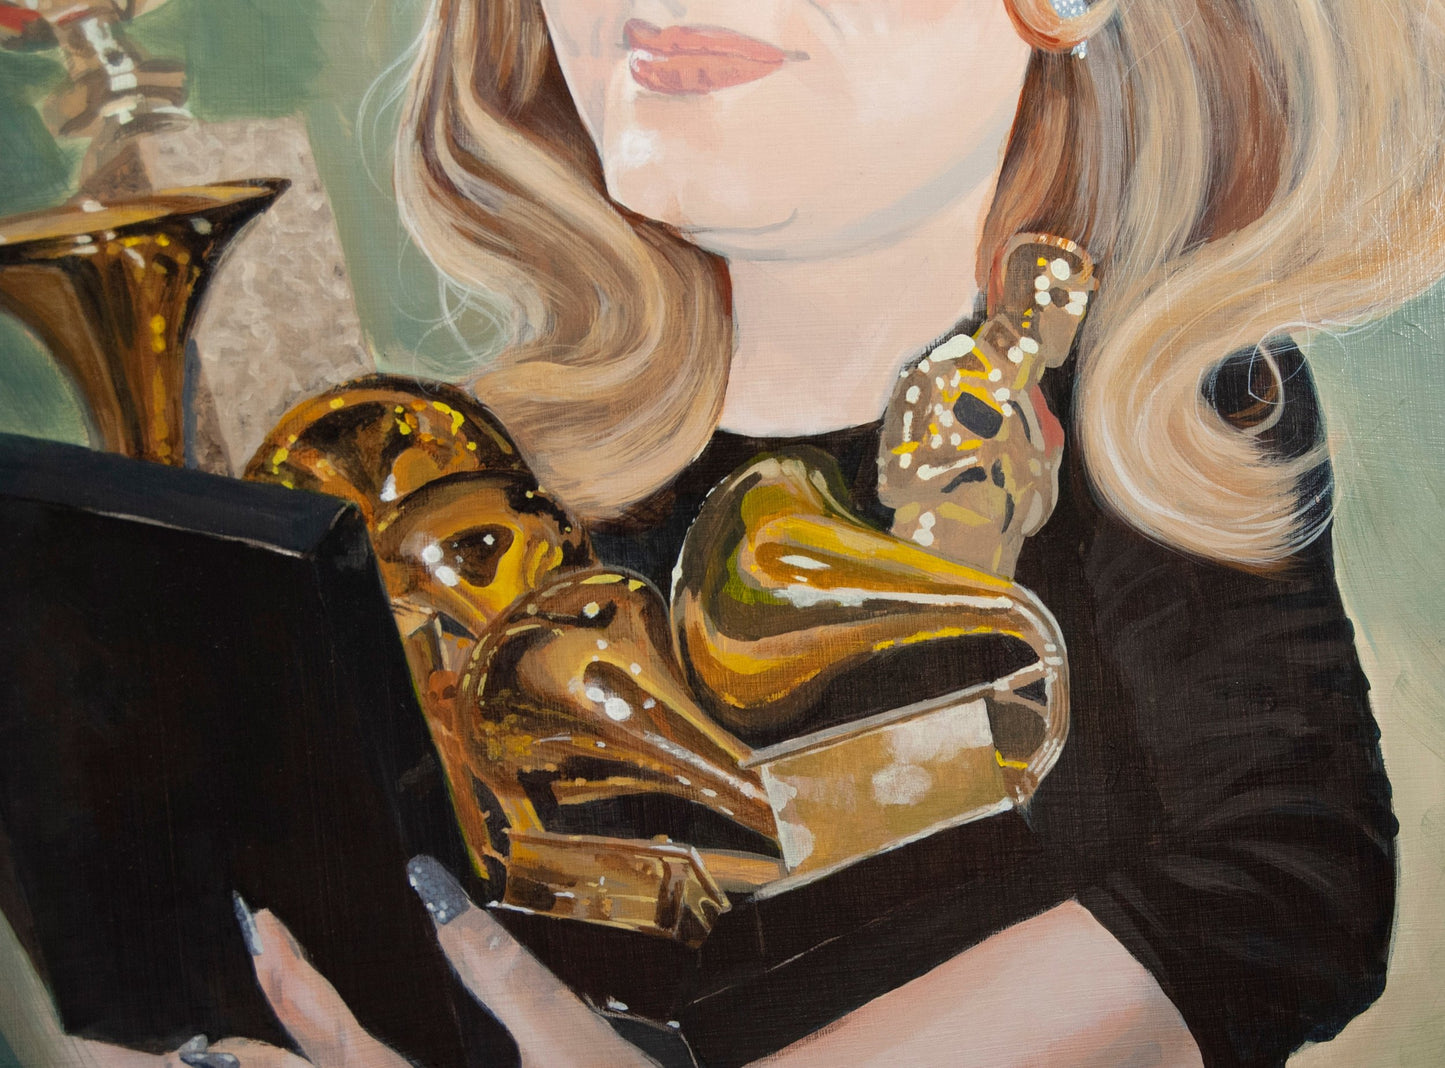 Adele painting